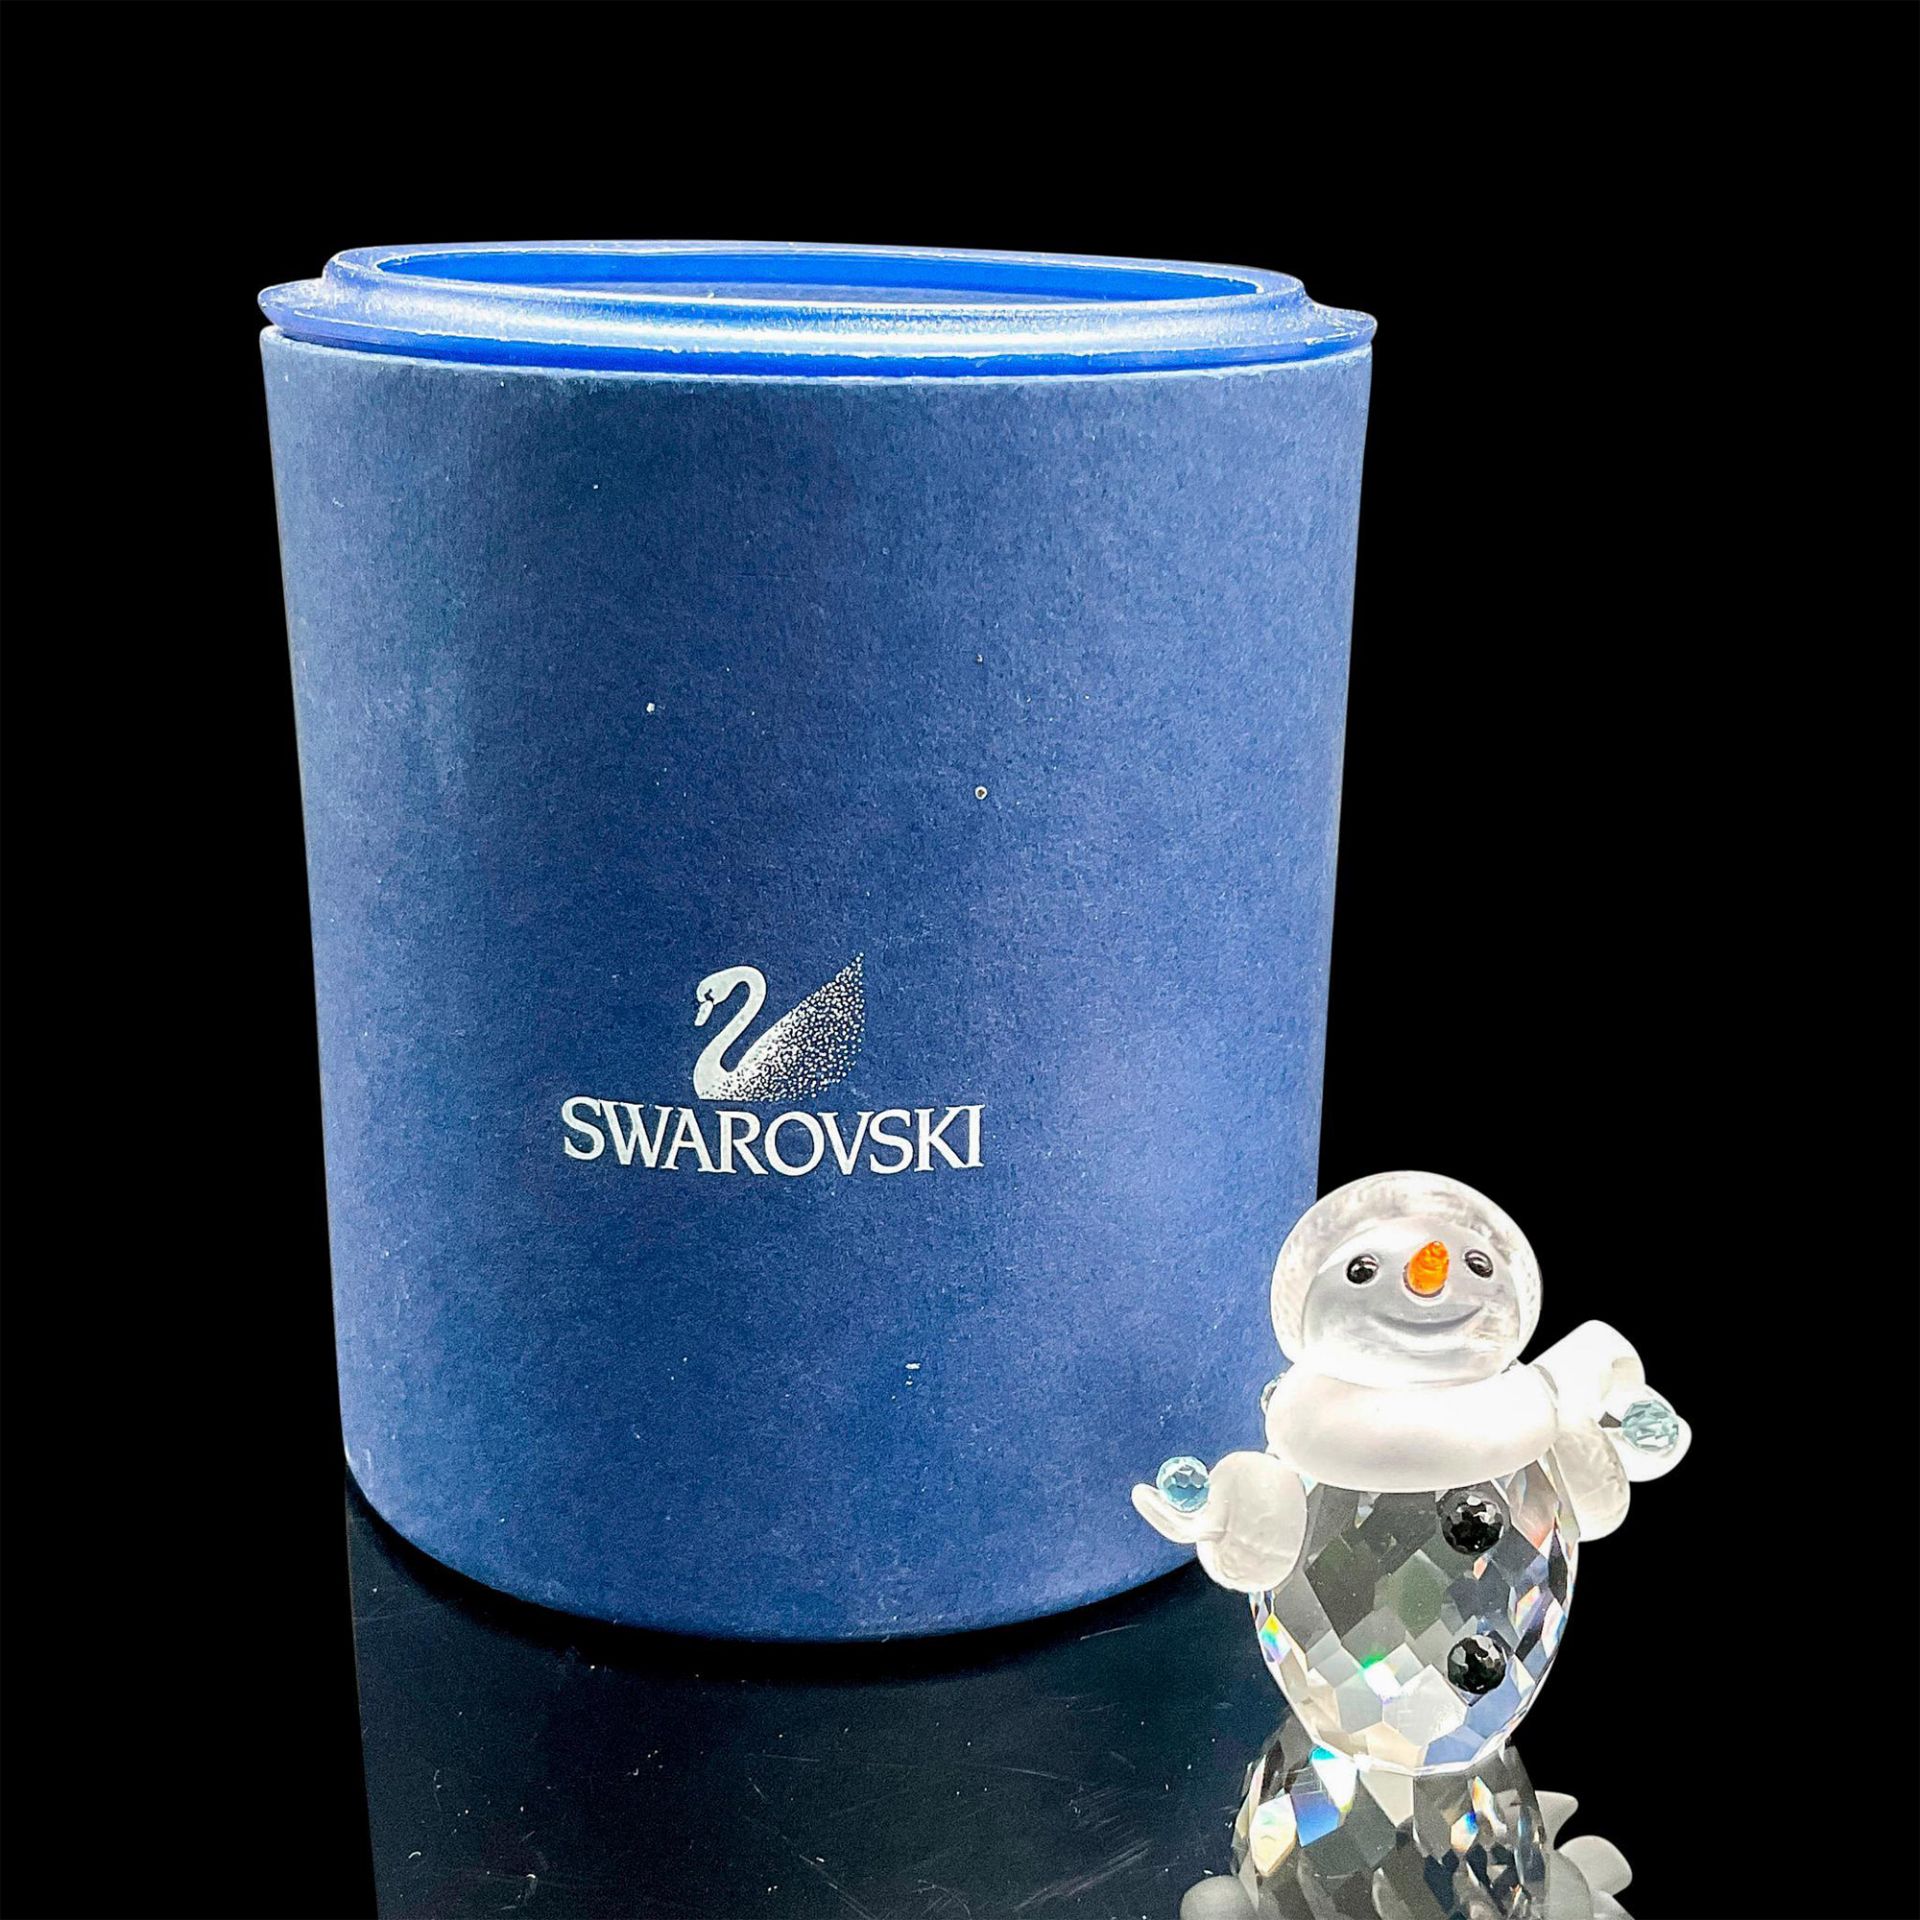 Swarovski Silver Crystal Miniature Figurine, Little Snowman - Image 2 of 4